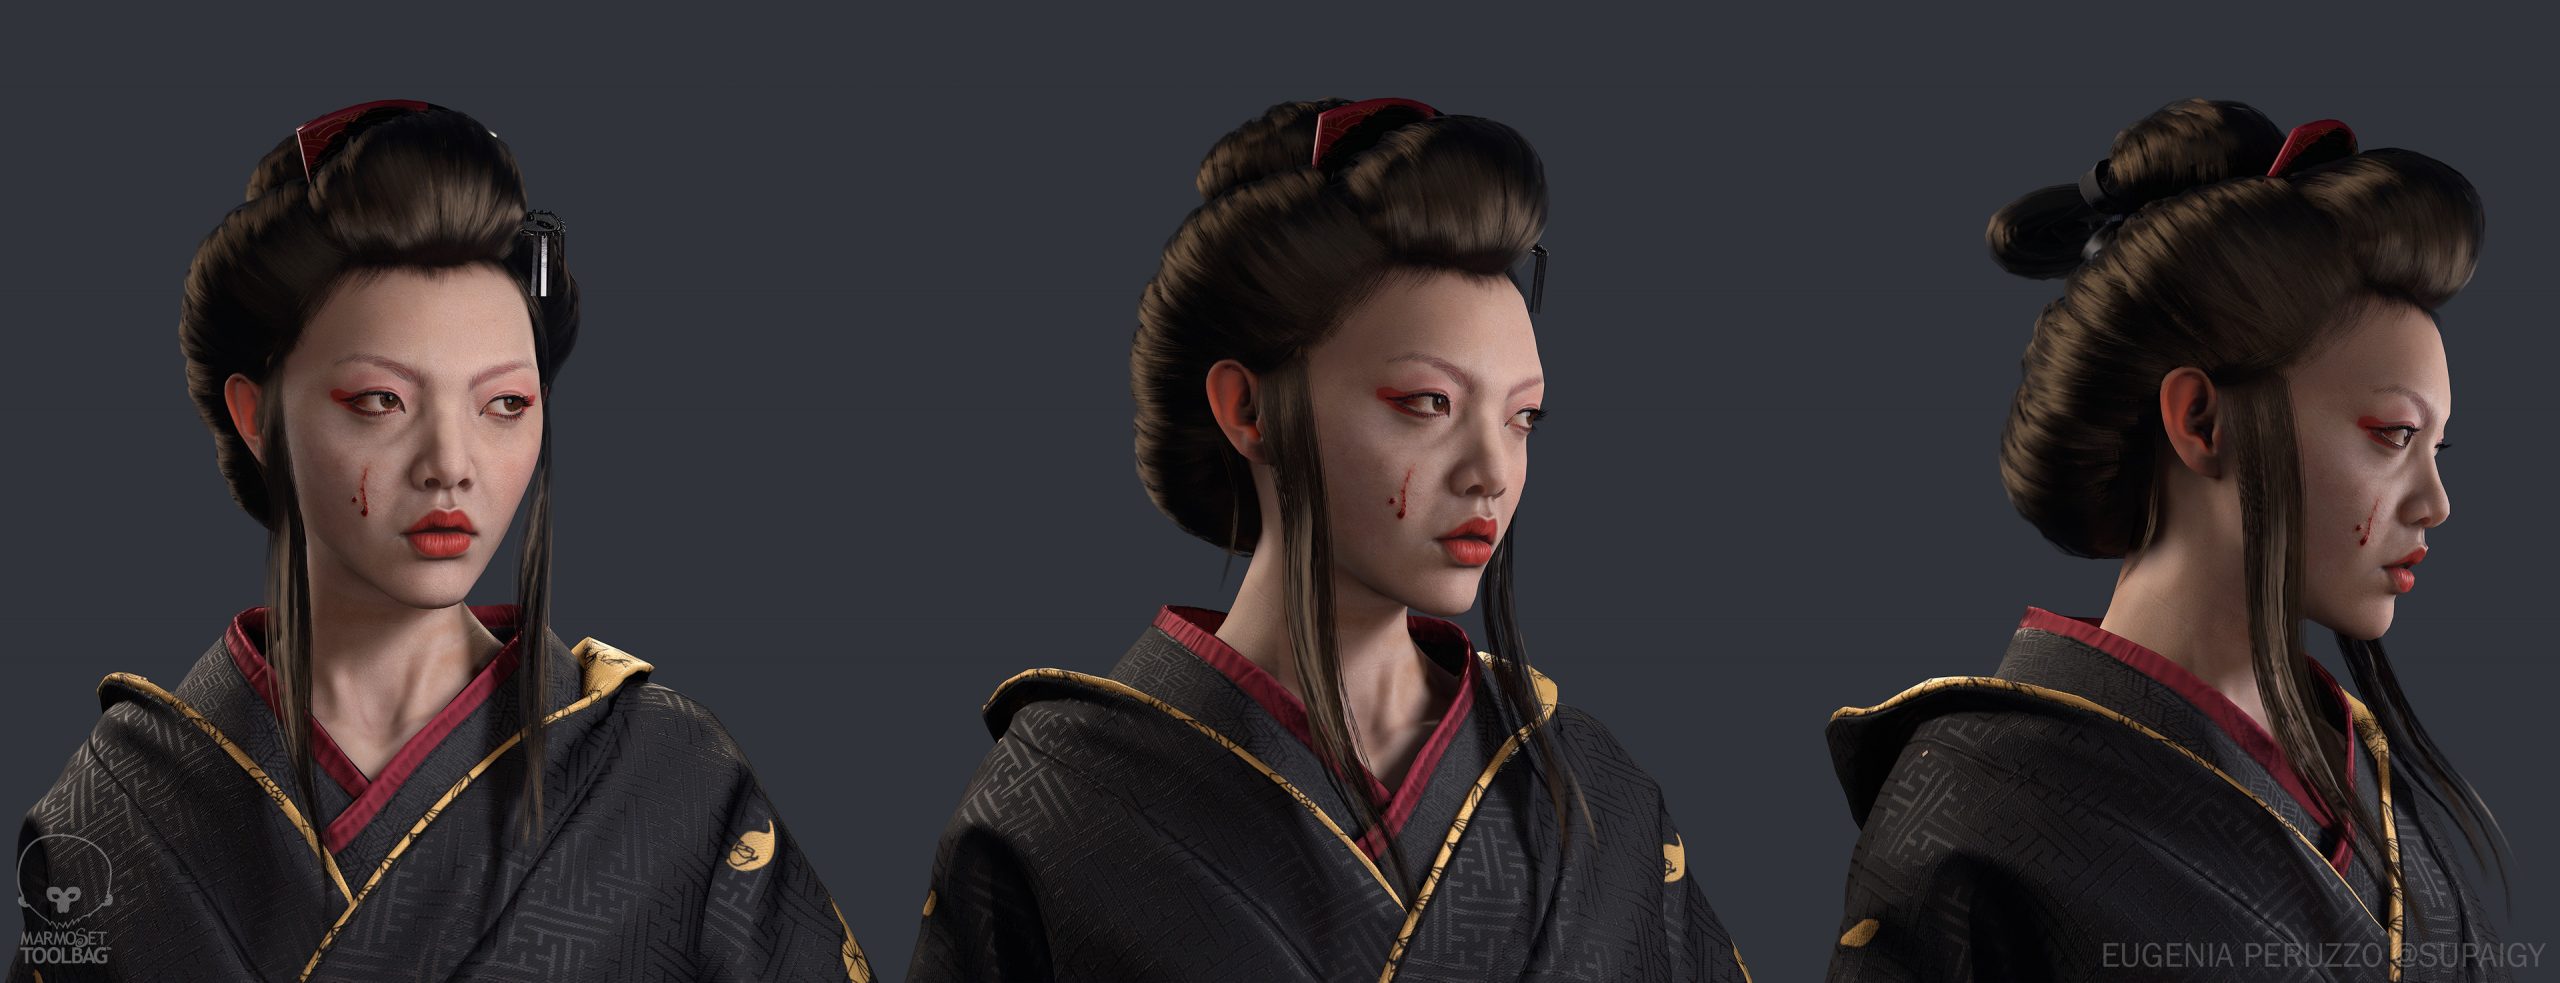 Three torso shots of a geisha outfit by Eugenia